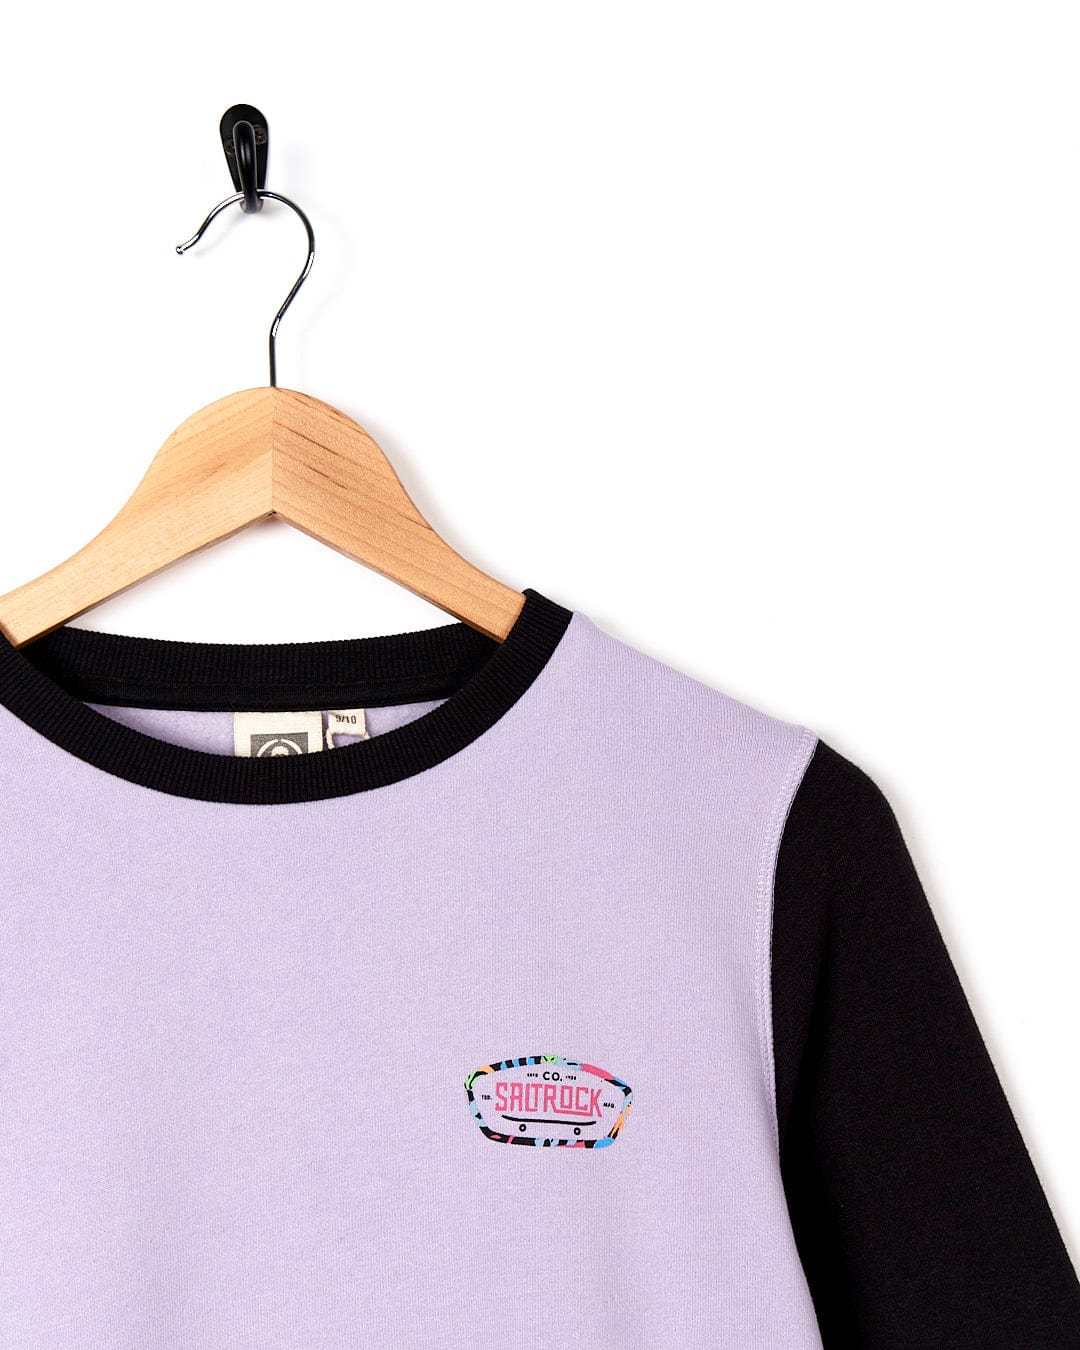 A Elissa - Kids Crew Sweat - Light Purple sweatshirt with a black and white Saltrock logo on it.